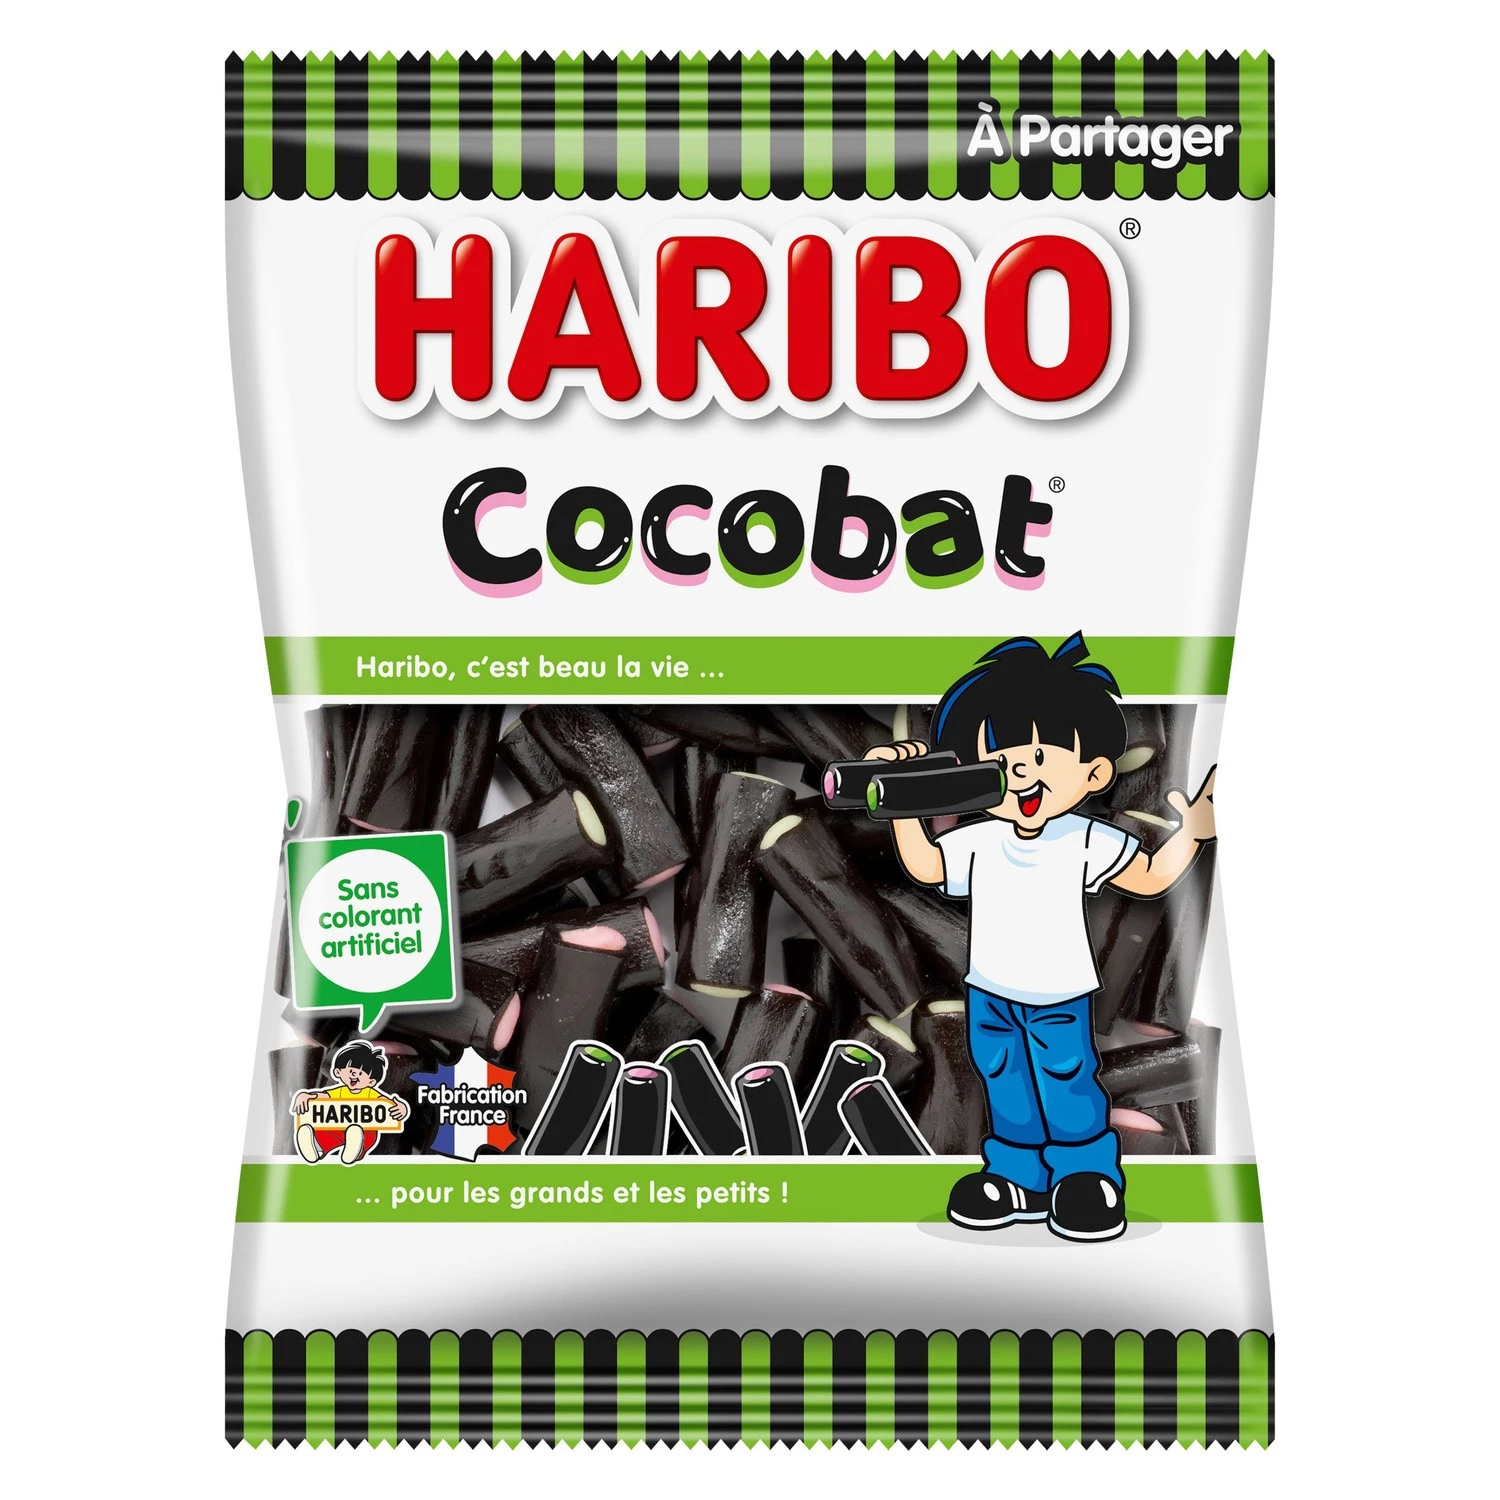 Cocobat candy; 300g - HARIBO